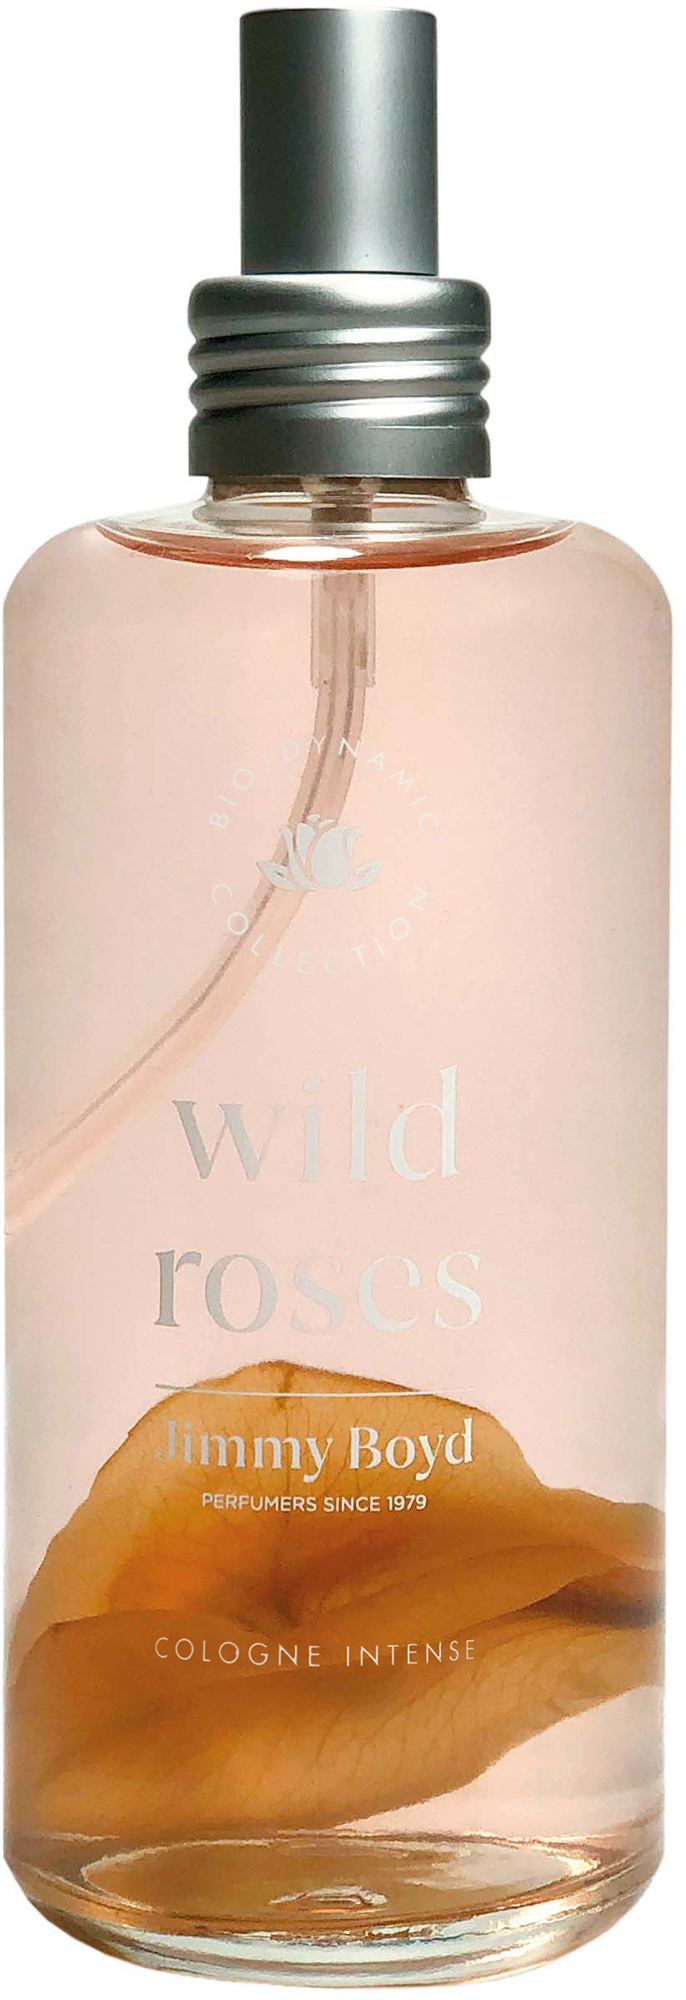 jimmy boyd wild roses woda kolońska 200 ml   